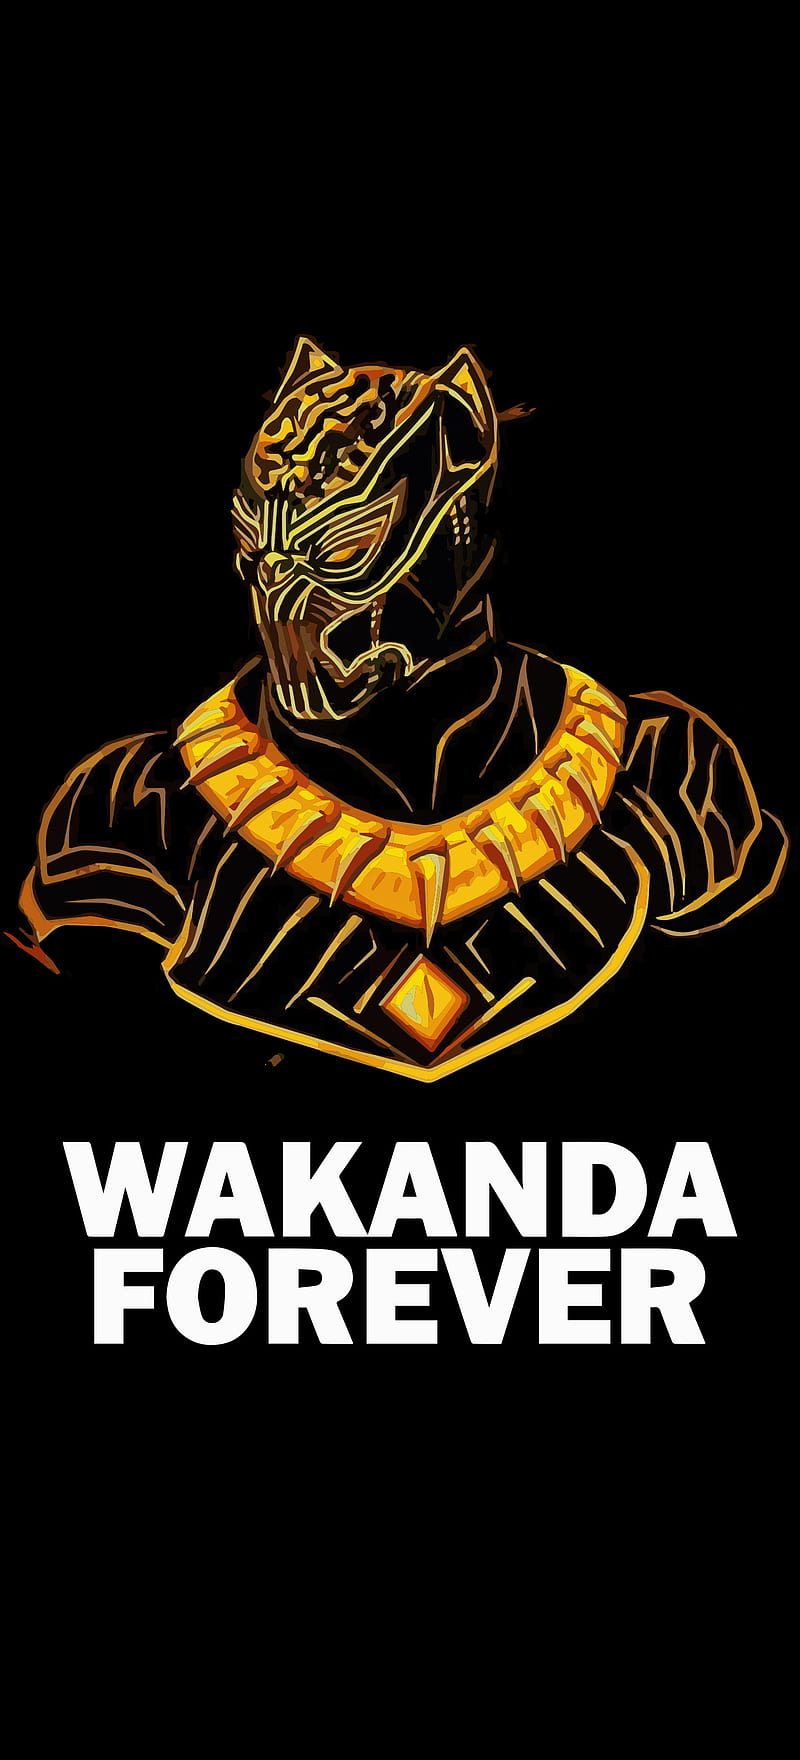 100+] Wakanda Forever Wallpapers | Wallpapers.com